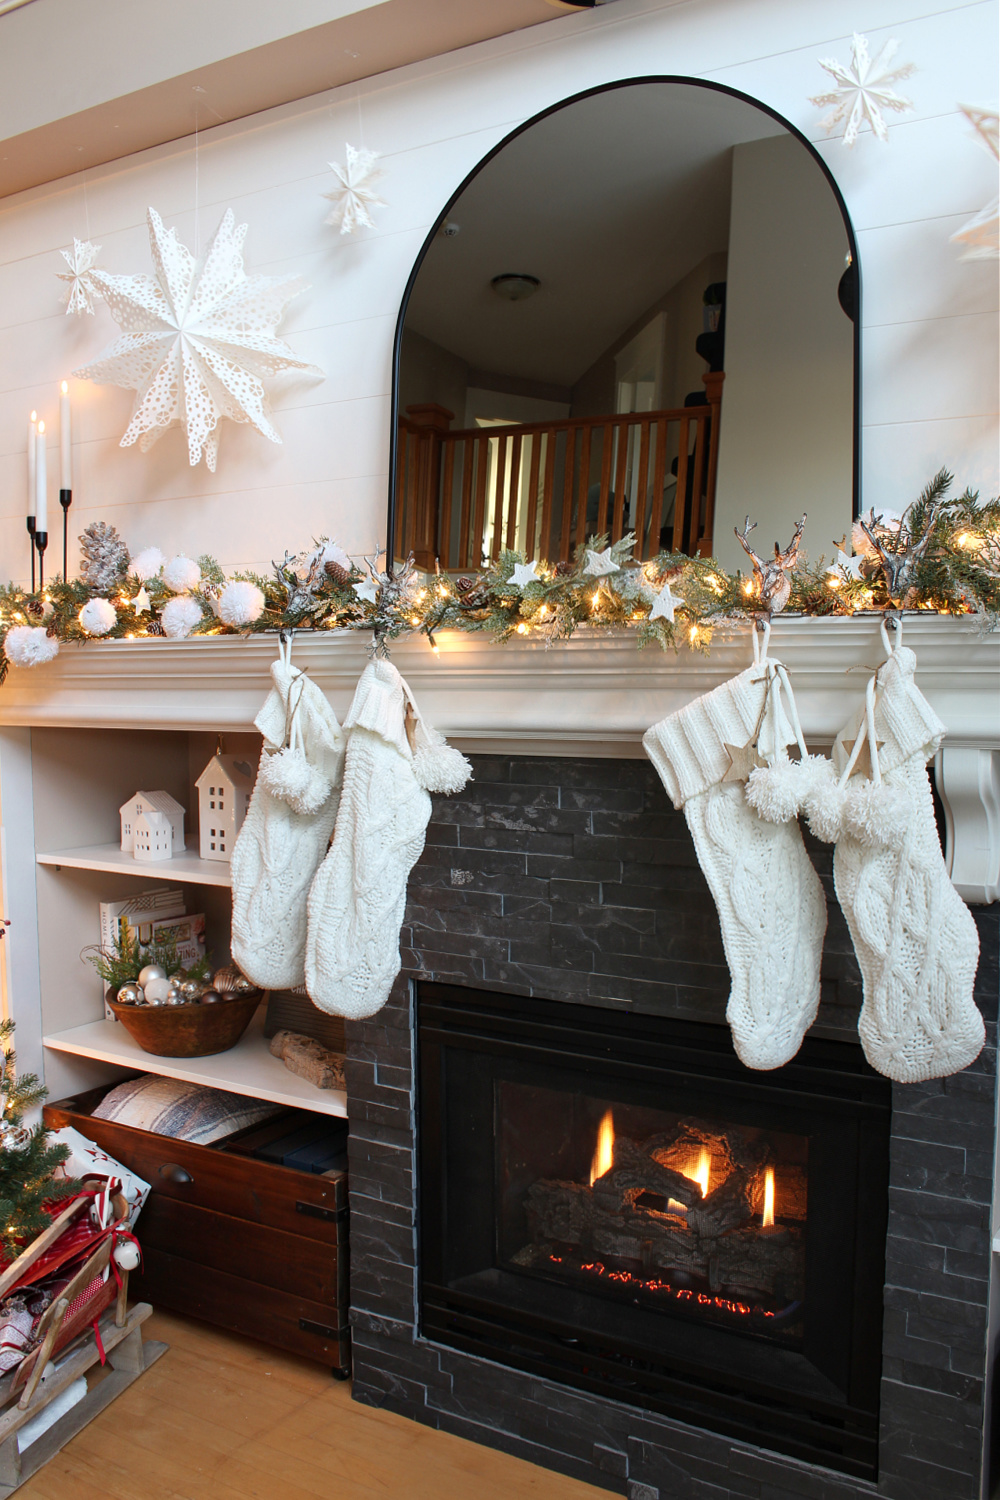 Winter wonderland Christmas mantel with white stockings.